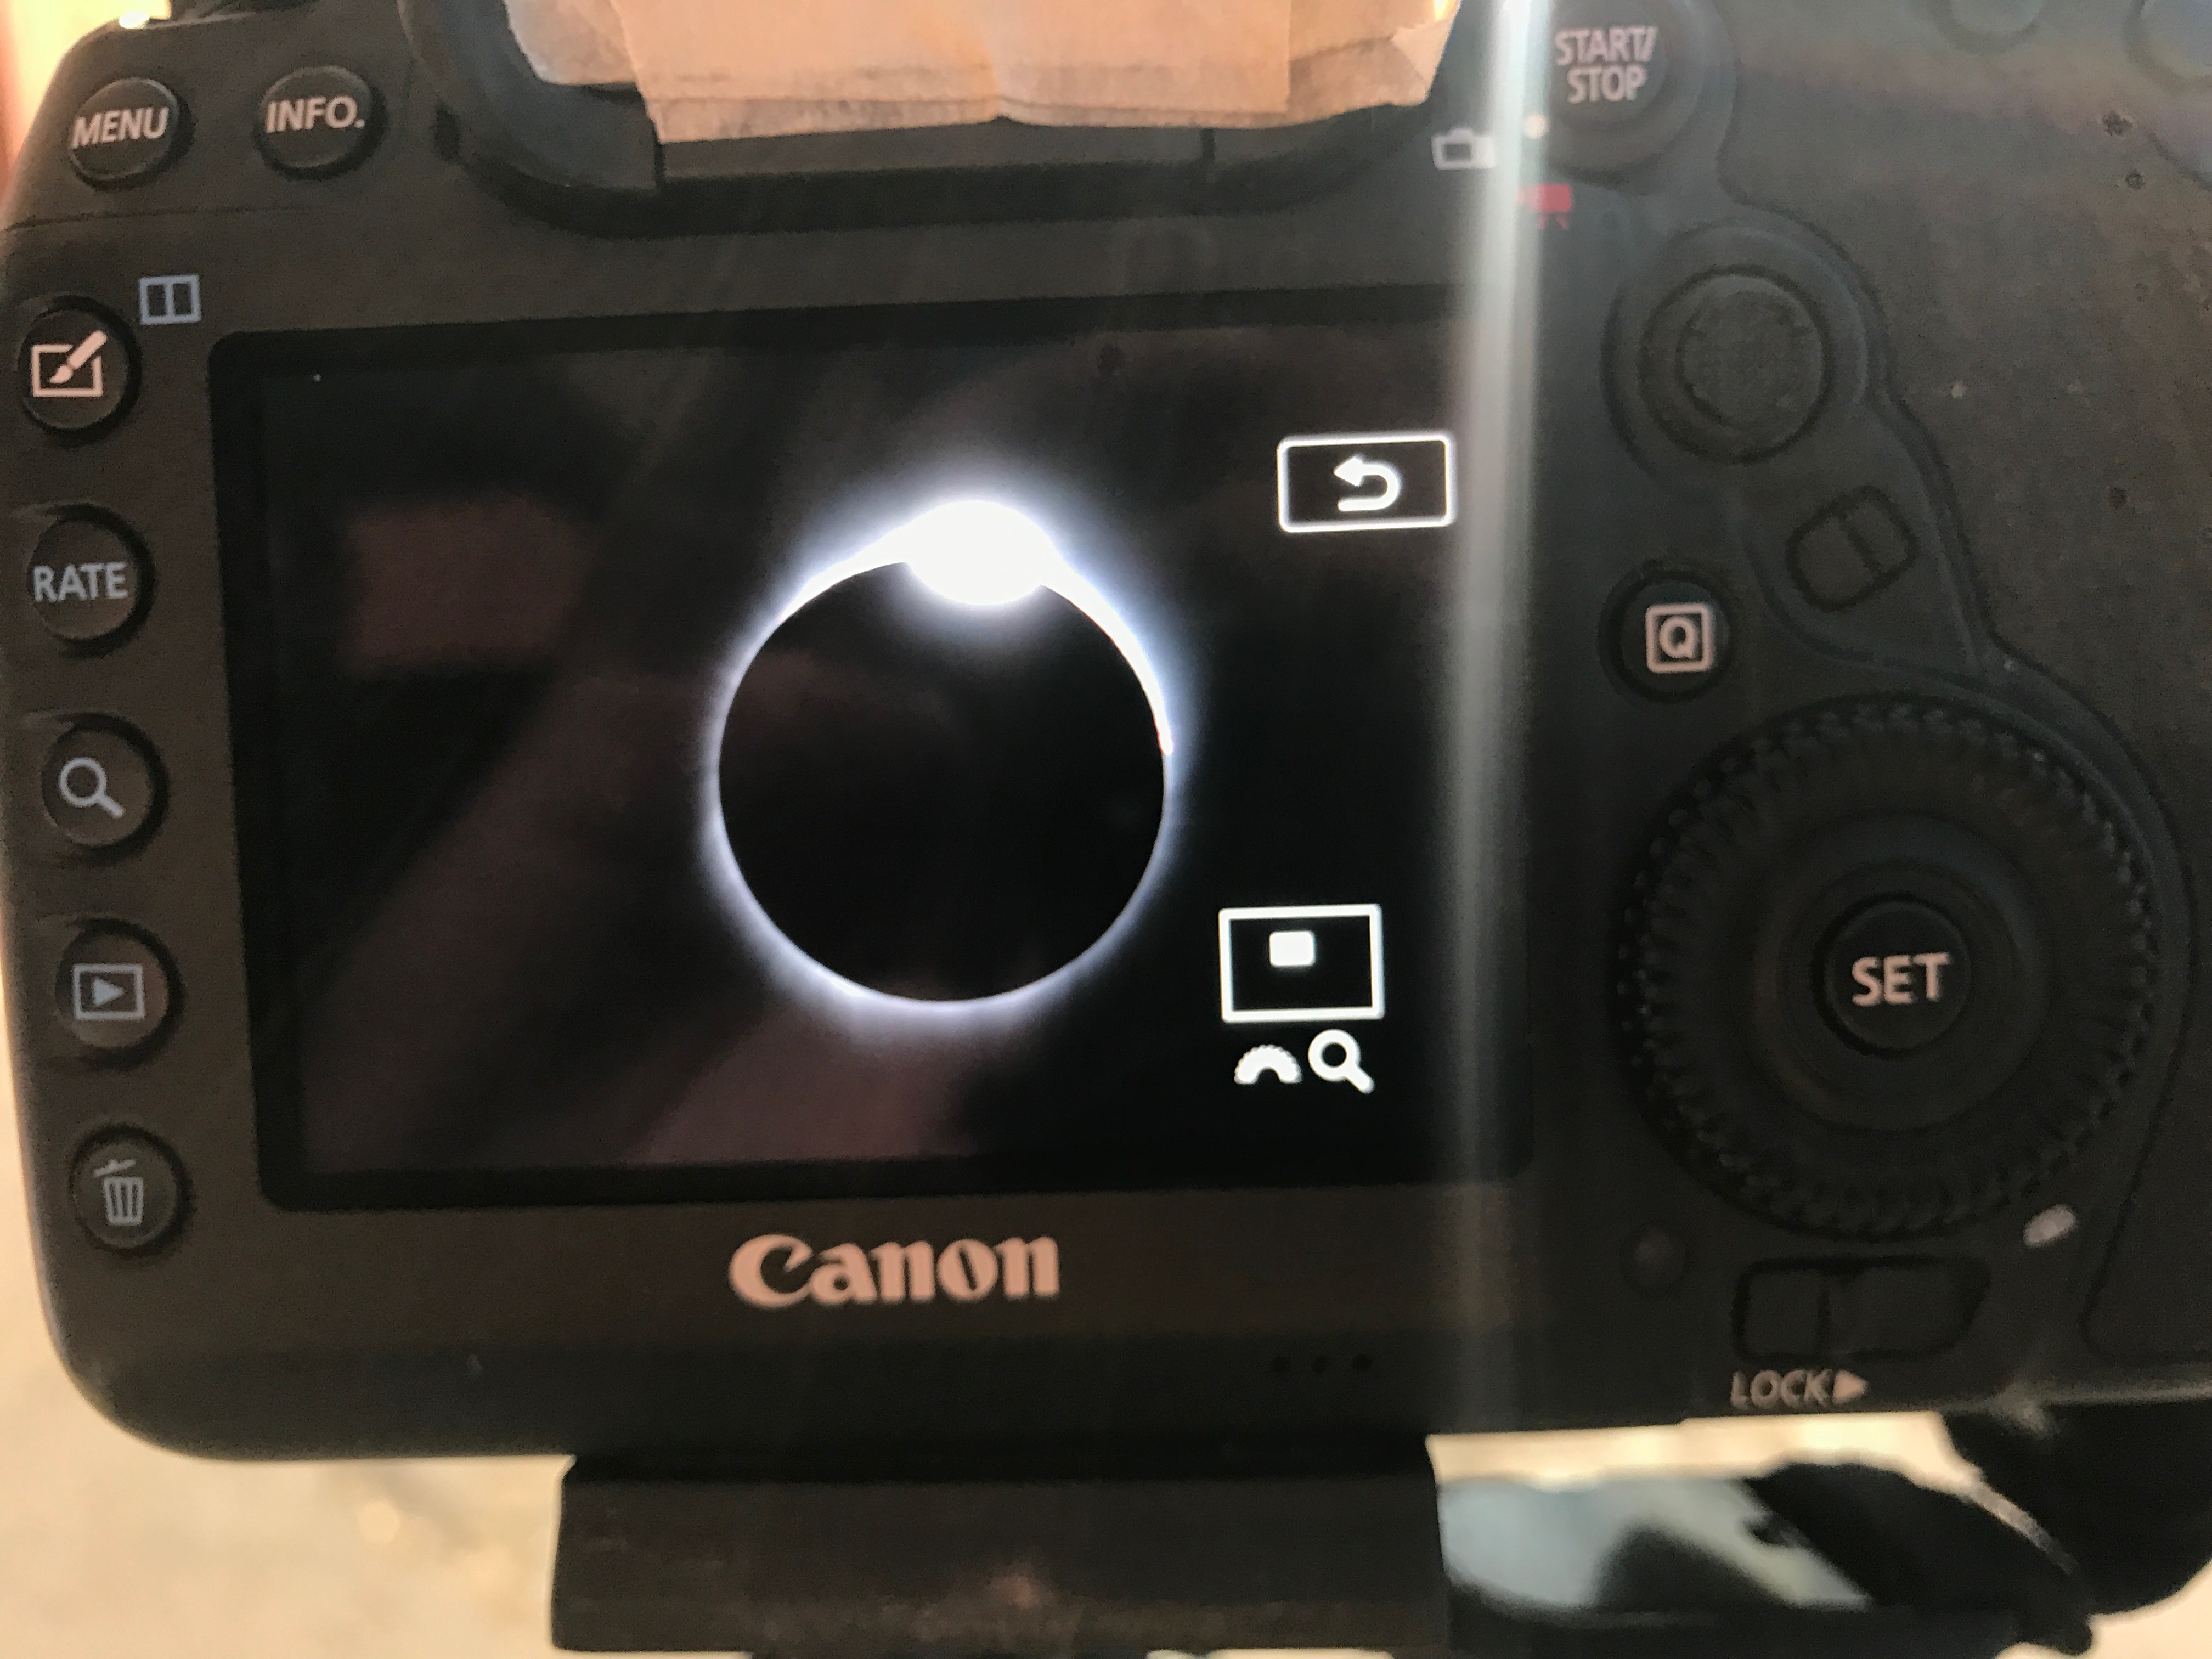 Solar eclipse photo settings